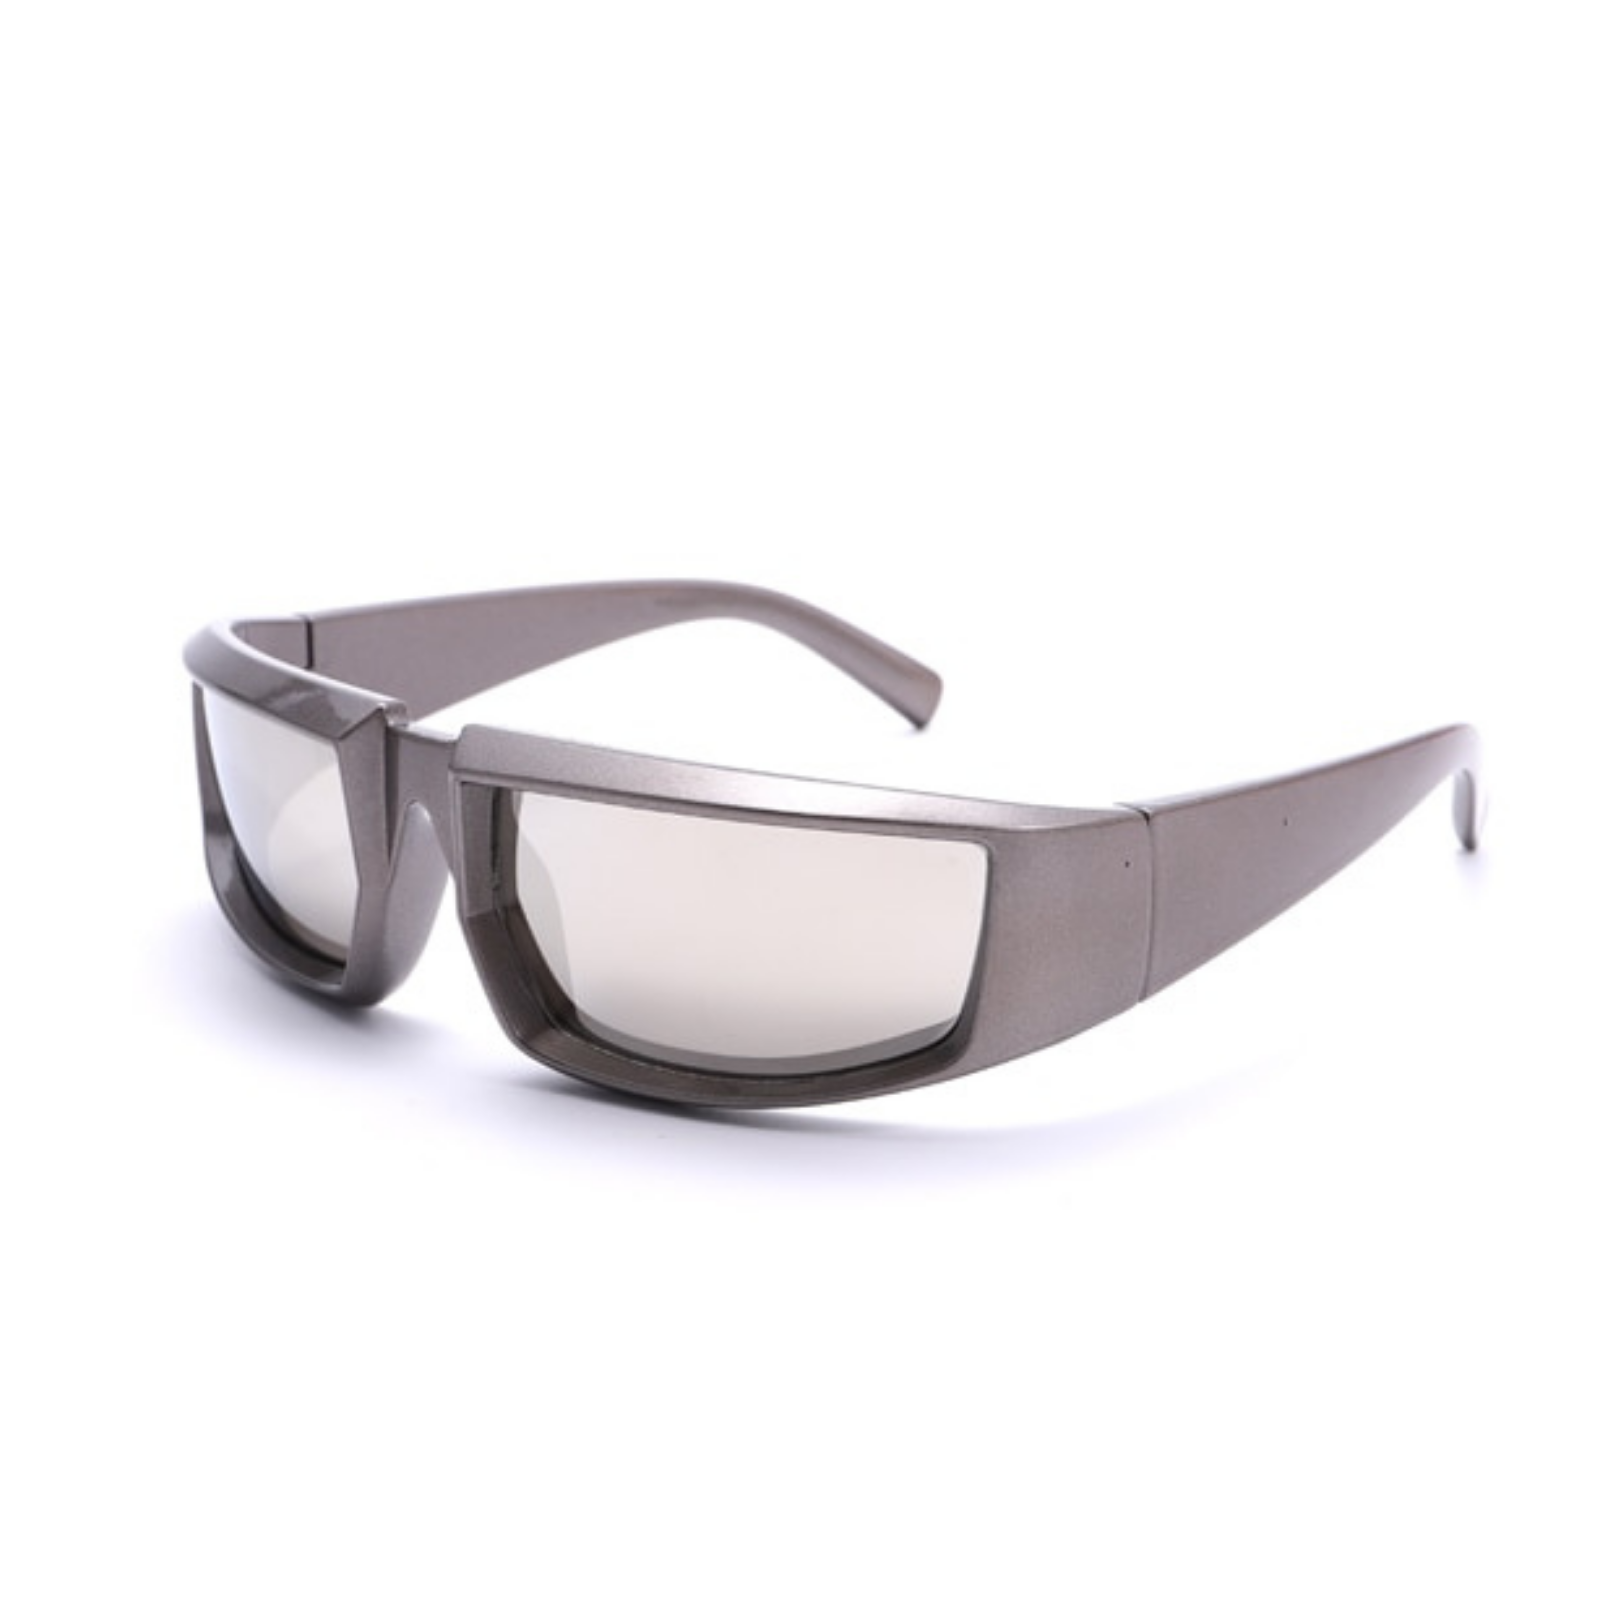 Lexus Sunglasses + Gray / Silver